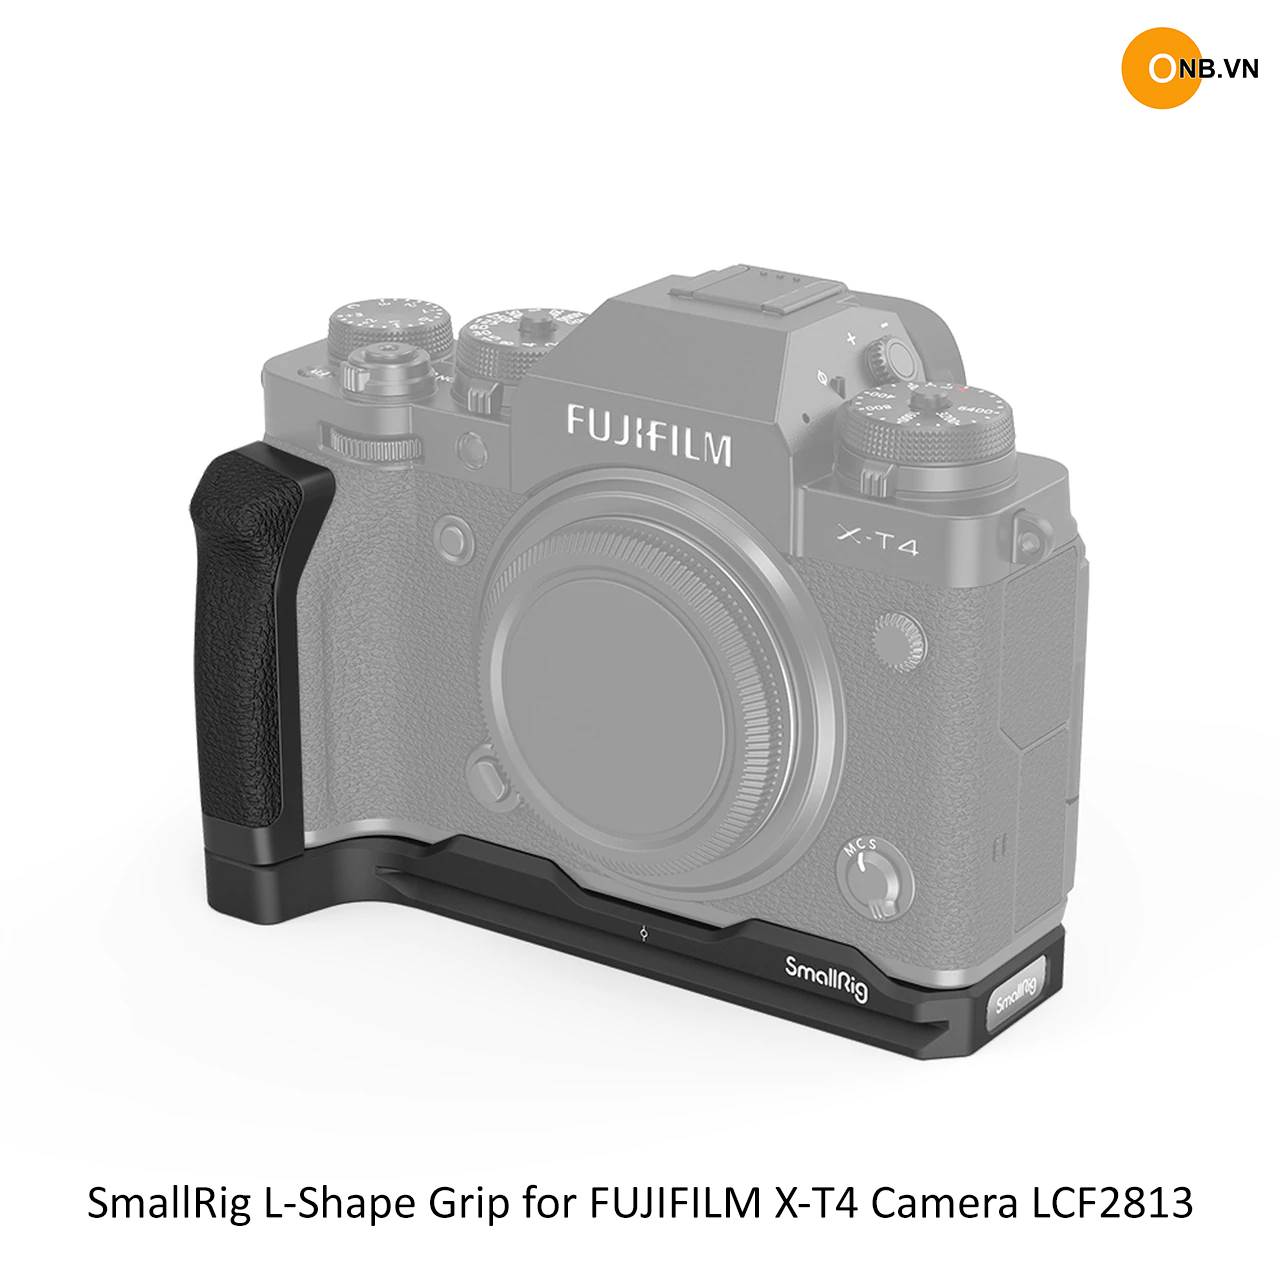 SmallRig L-Shape Grip for FUJIFILM X-T4 Camera 2813